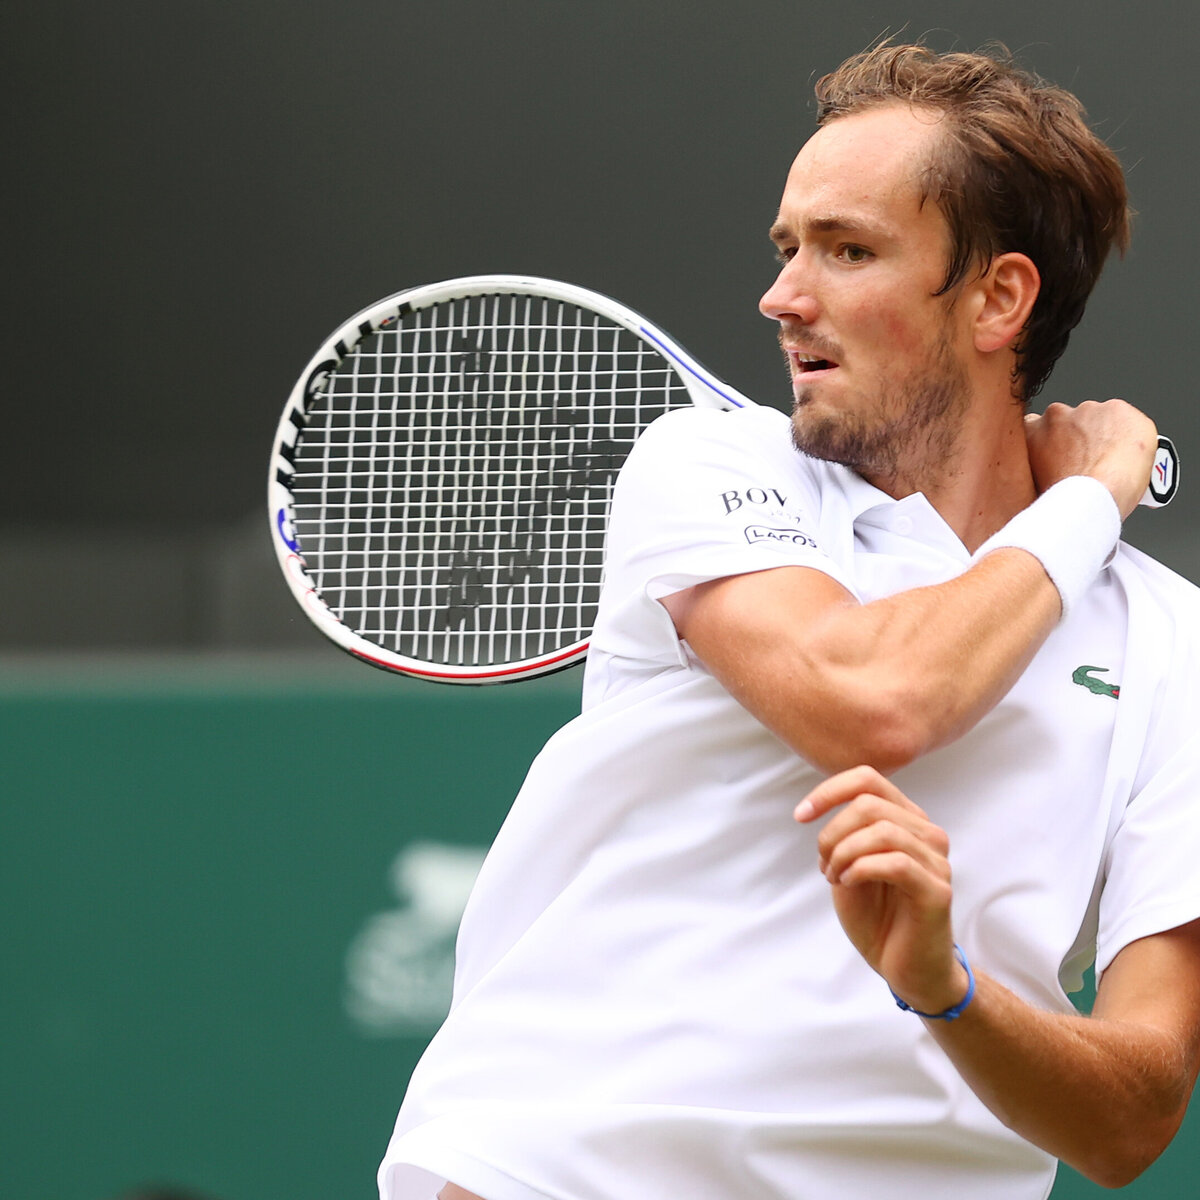 Wimbledon 2021 JETZT LIVE Daniil Medvedev gegen Marin Cilic im fünften Satz · tennisnet